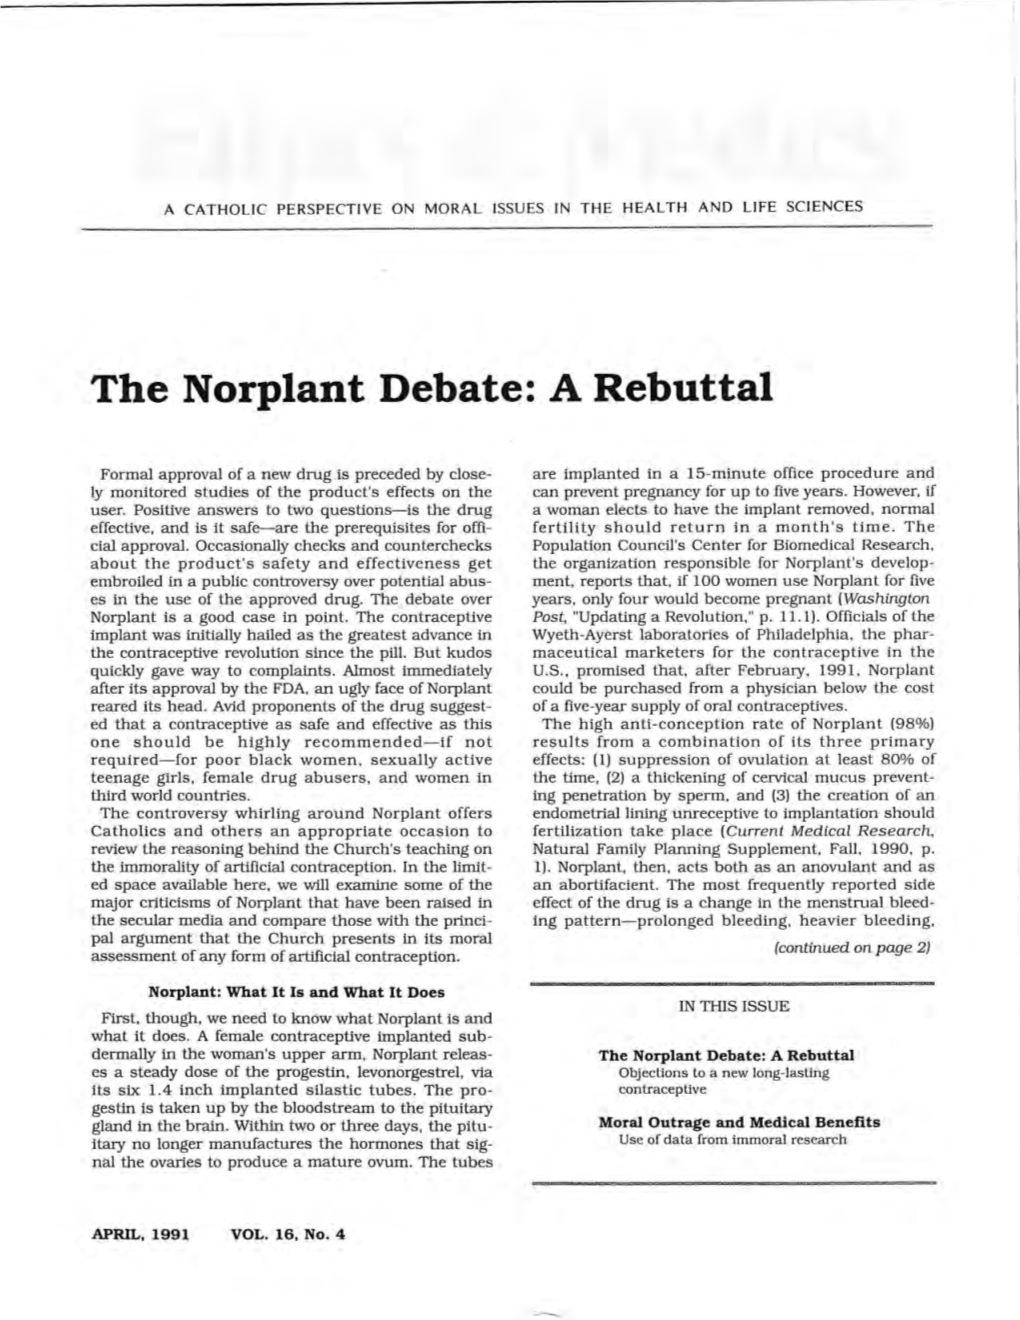 The Norplant Debate: a Rebuttal